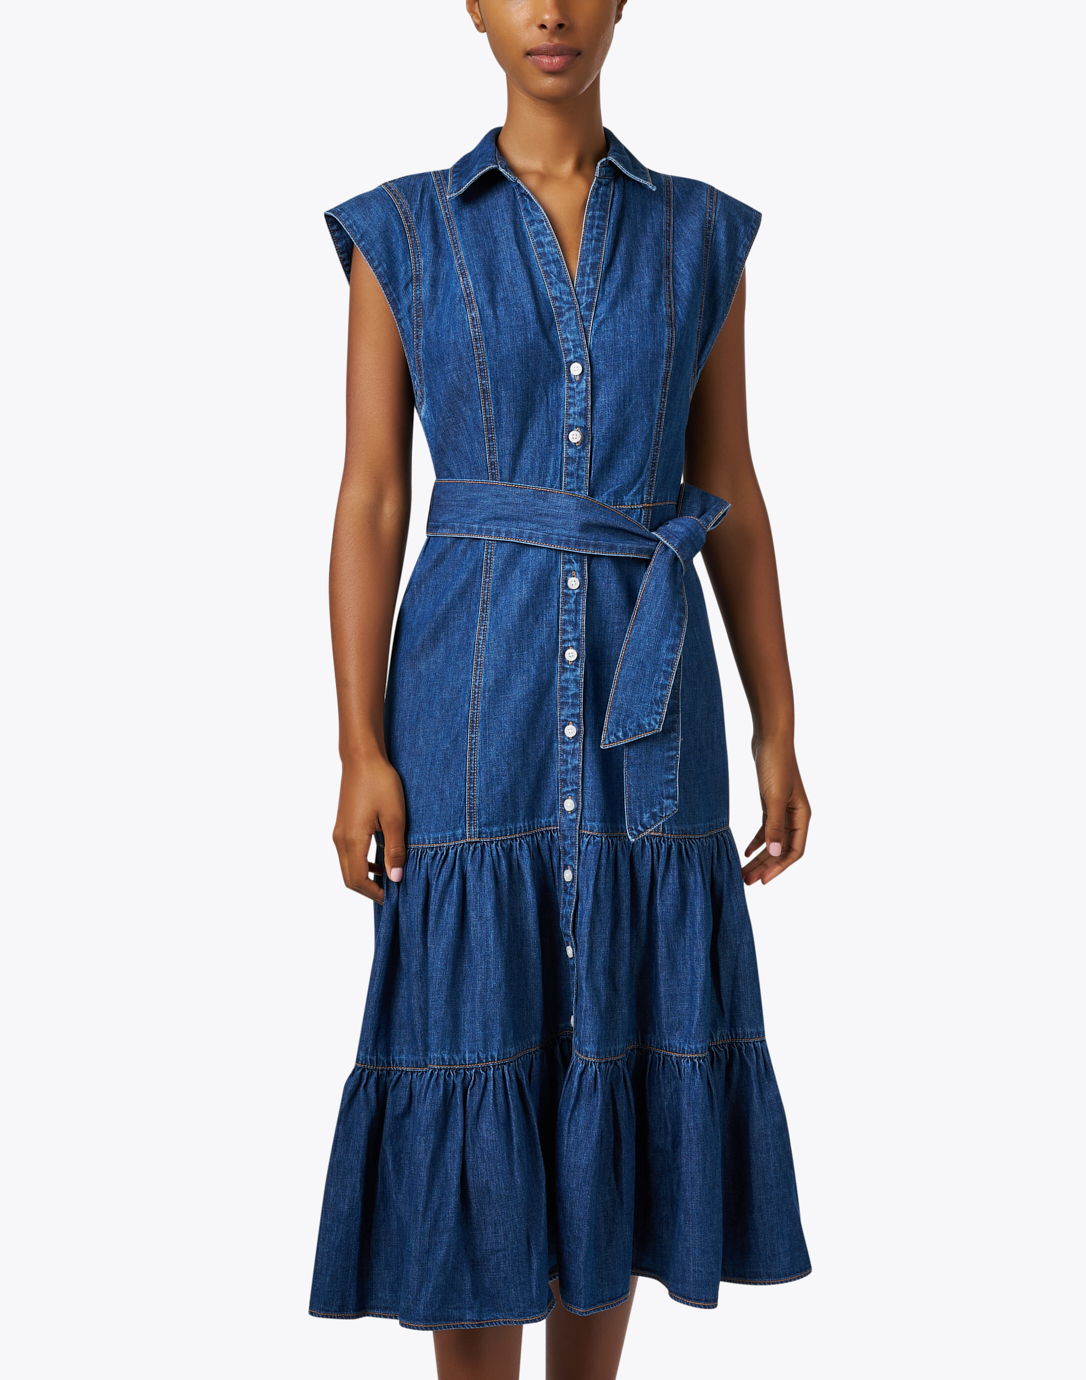 Arnetta Blue Denim Dress | Veronica Beard